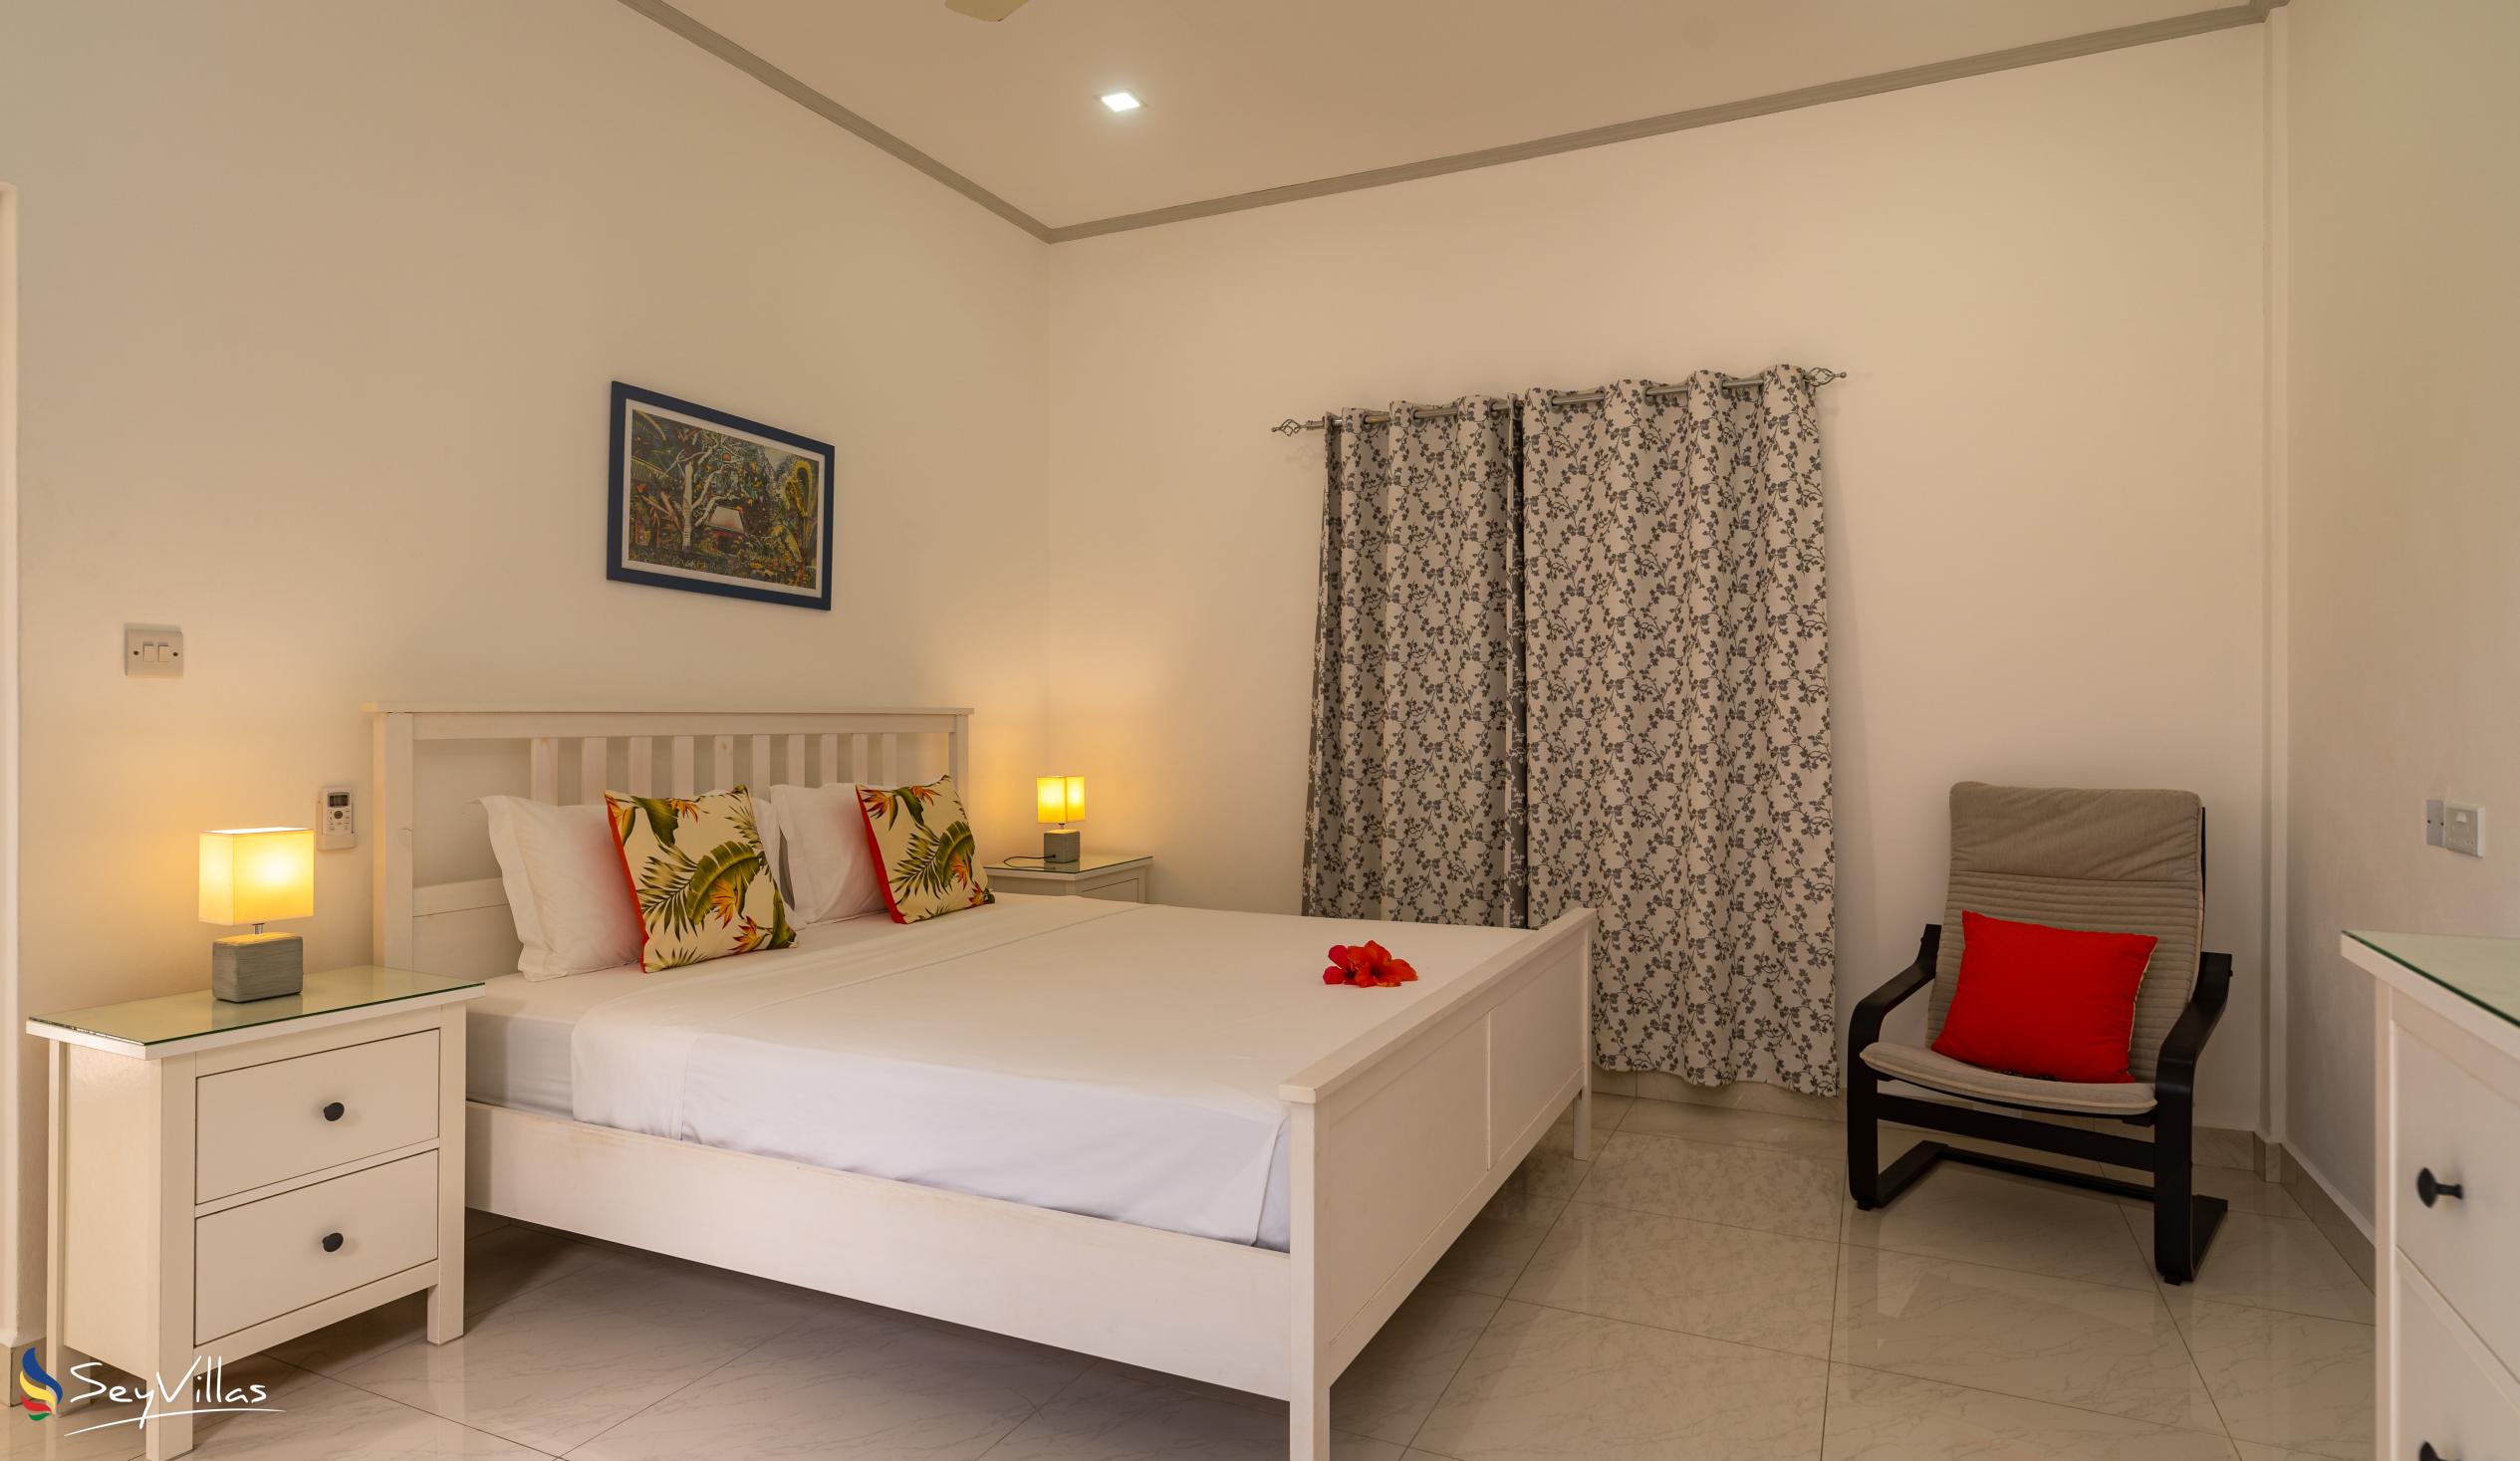 Photo 79: East Horizon - Deluxe 1-Bedroom Apartment - Mahé (Seychelles)